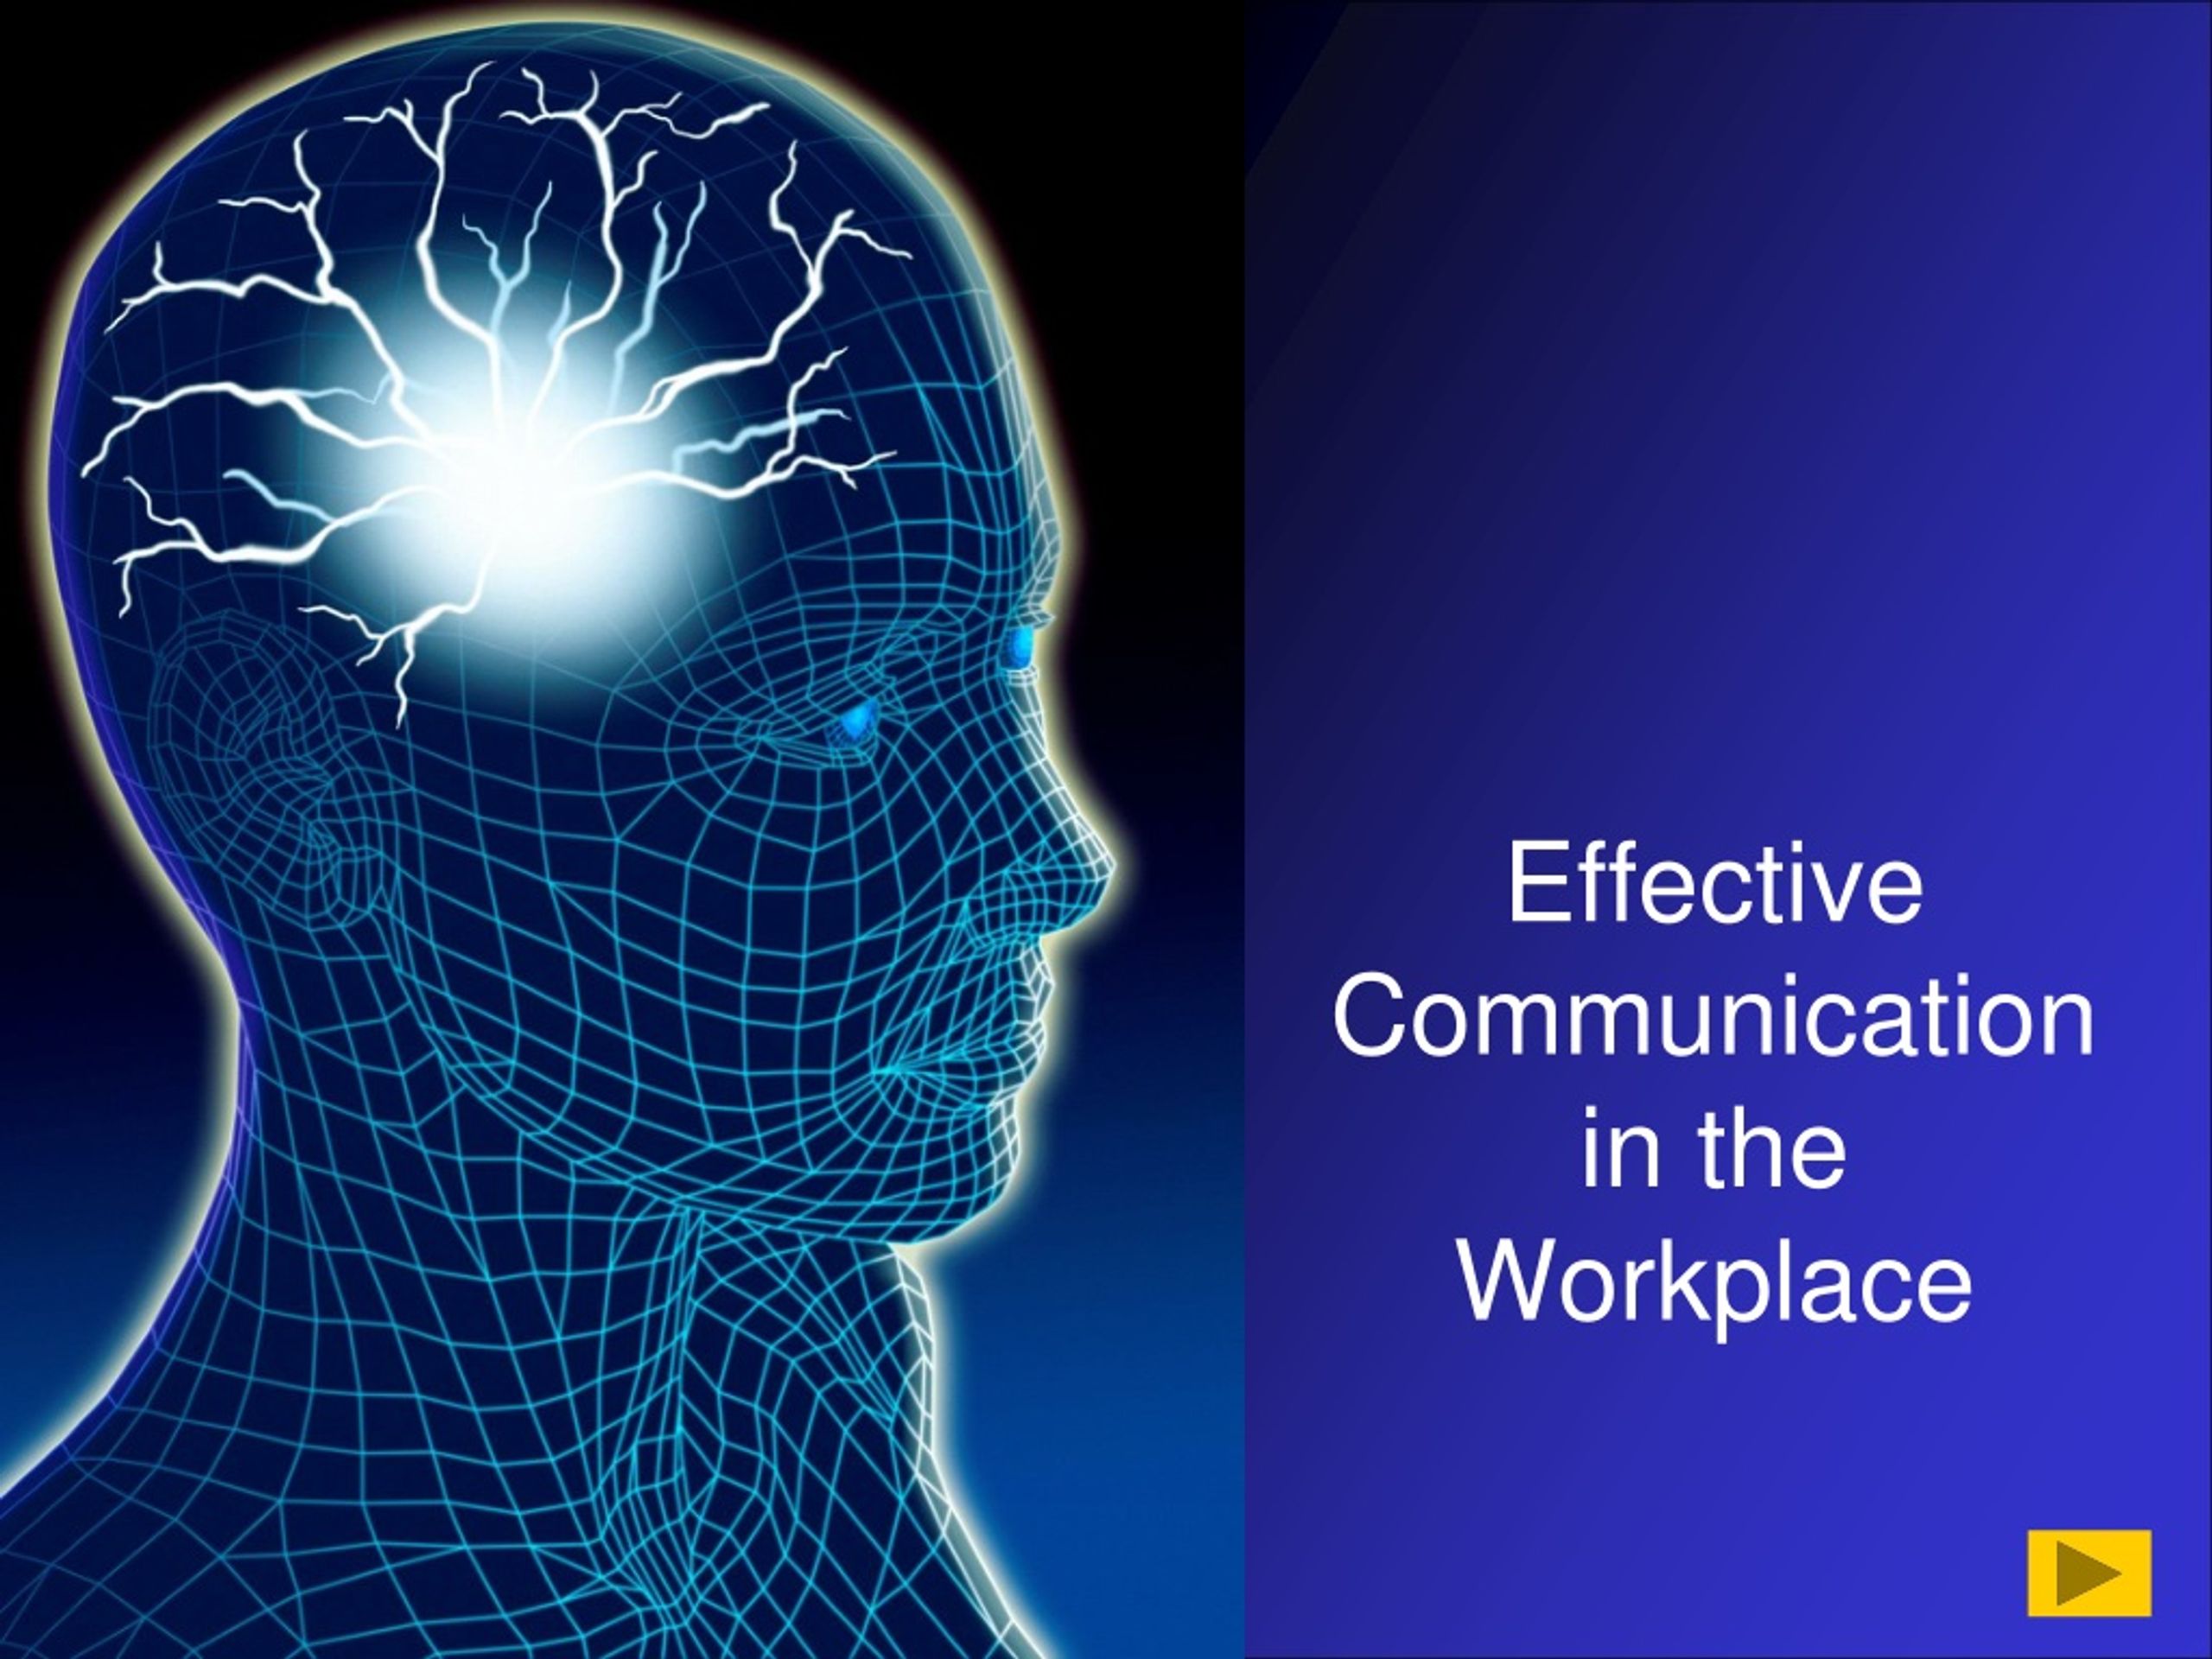 workplace communication powerpoint presentation